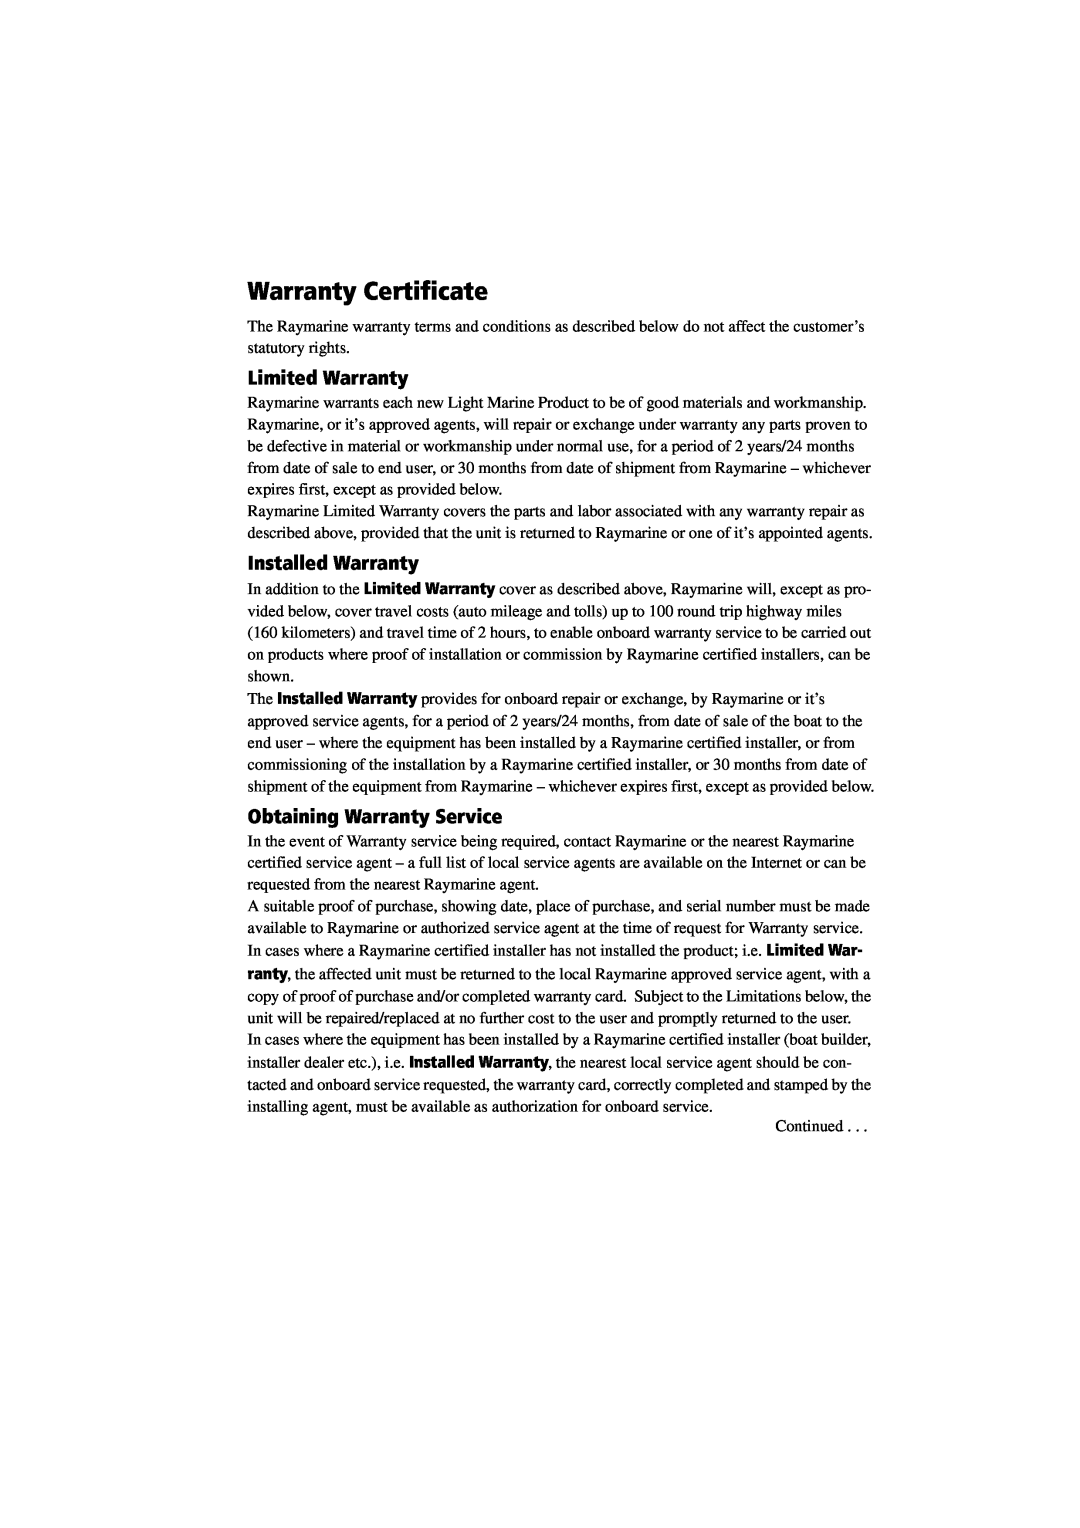 Raymarine 300 manual Warranty Certificate, Limited Warranty, Installed Warranty, Obtaining Warranty Service 